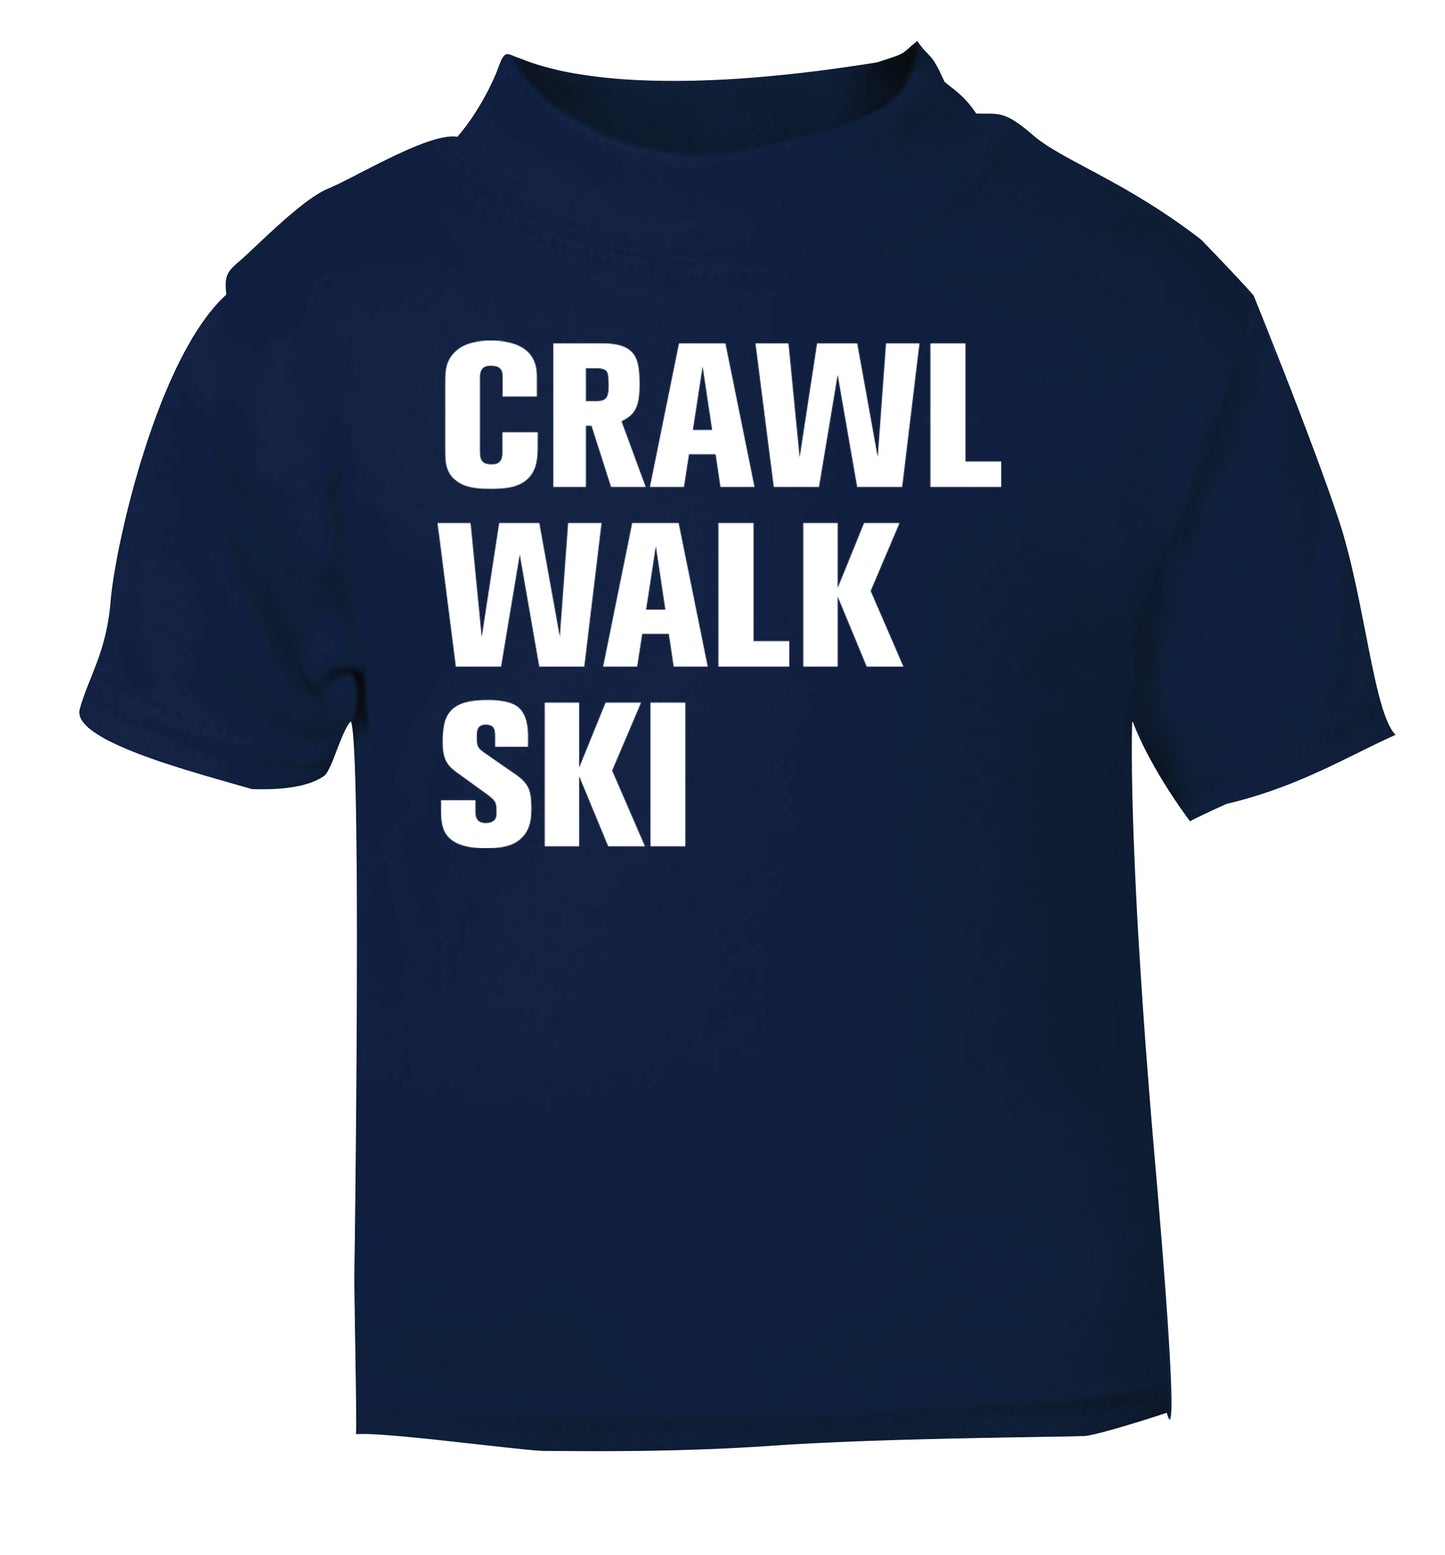 Crawl walk ski navy Baby Toddler Tshirt 2 Years